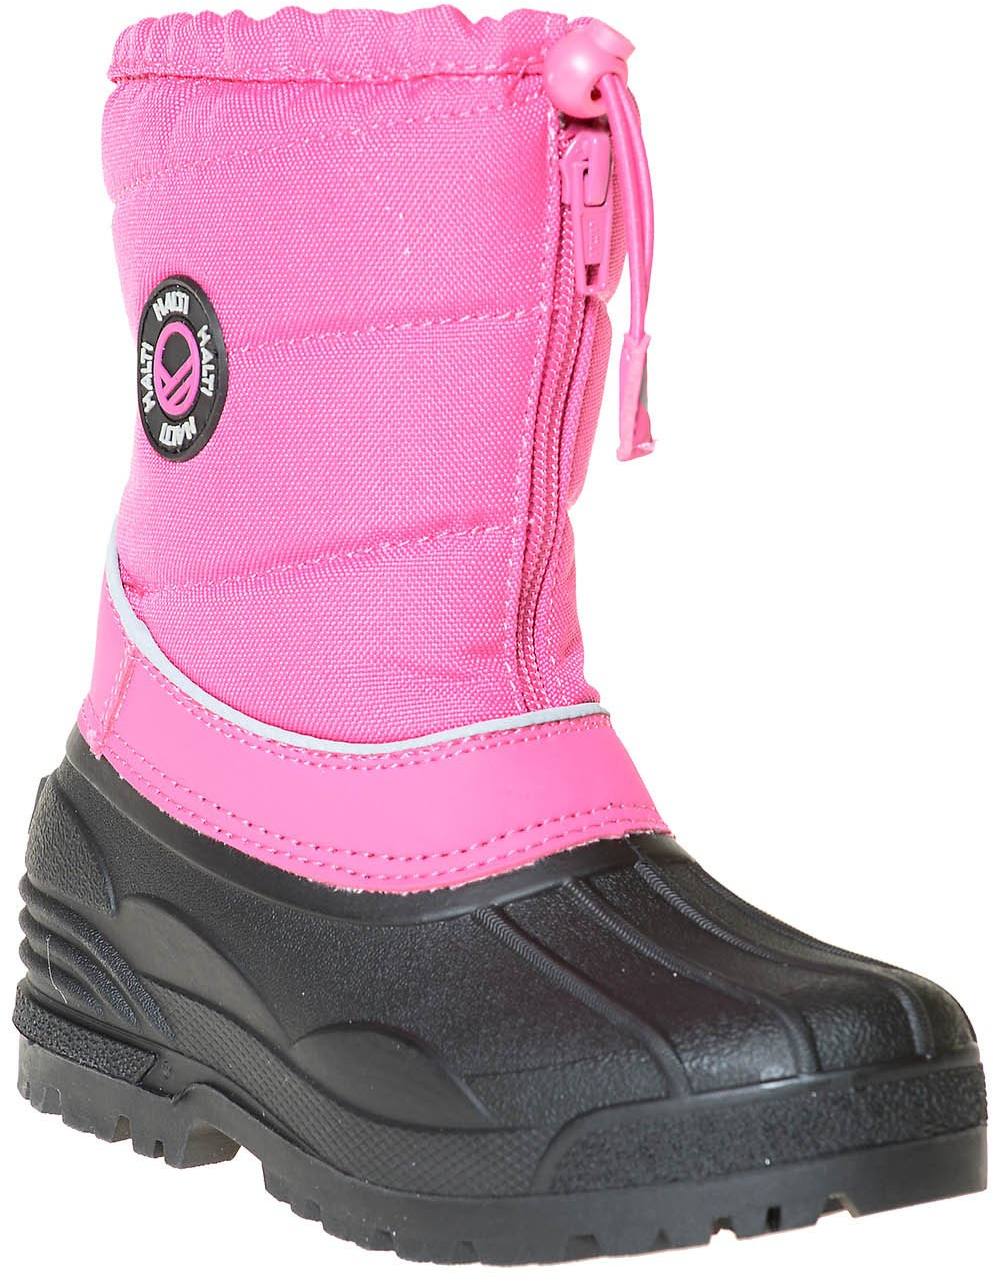 halti snow boots